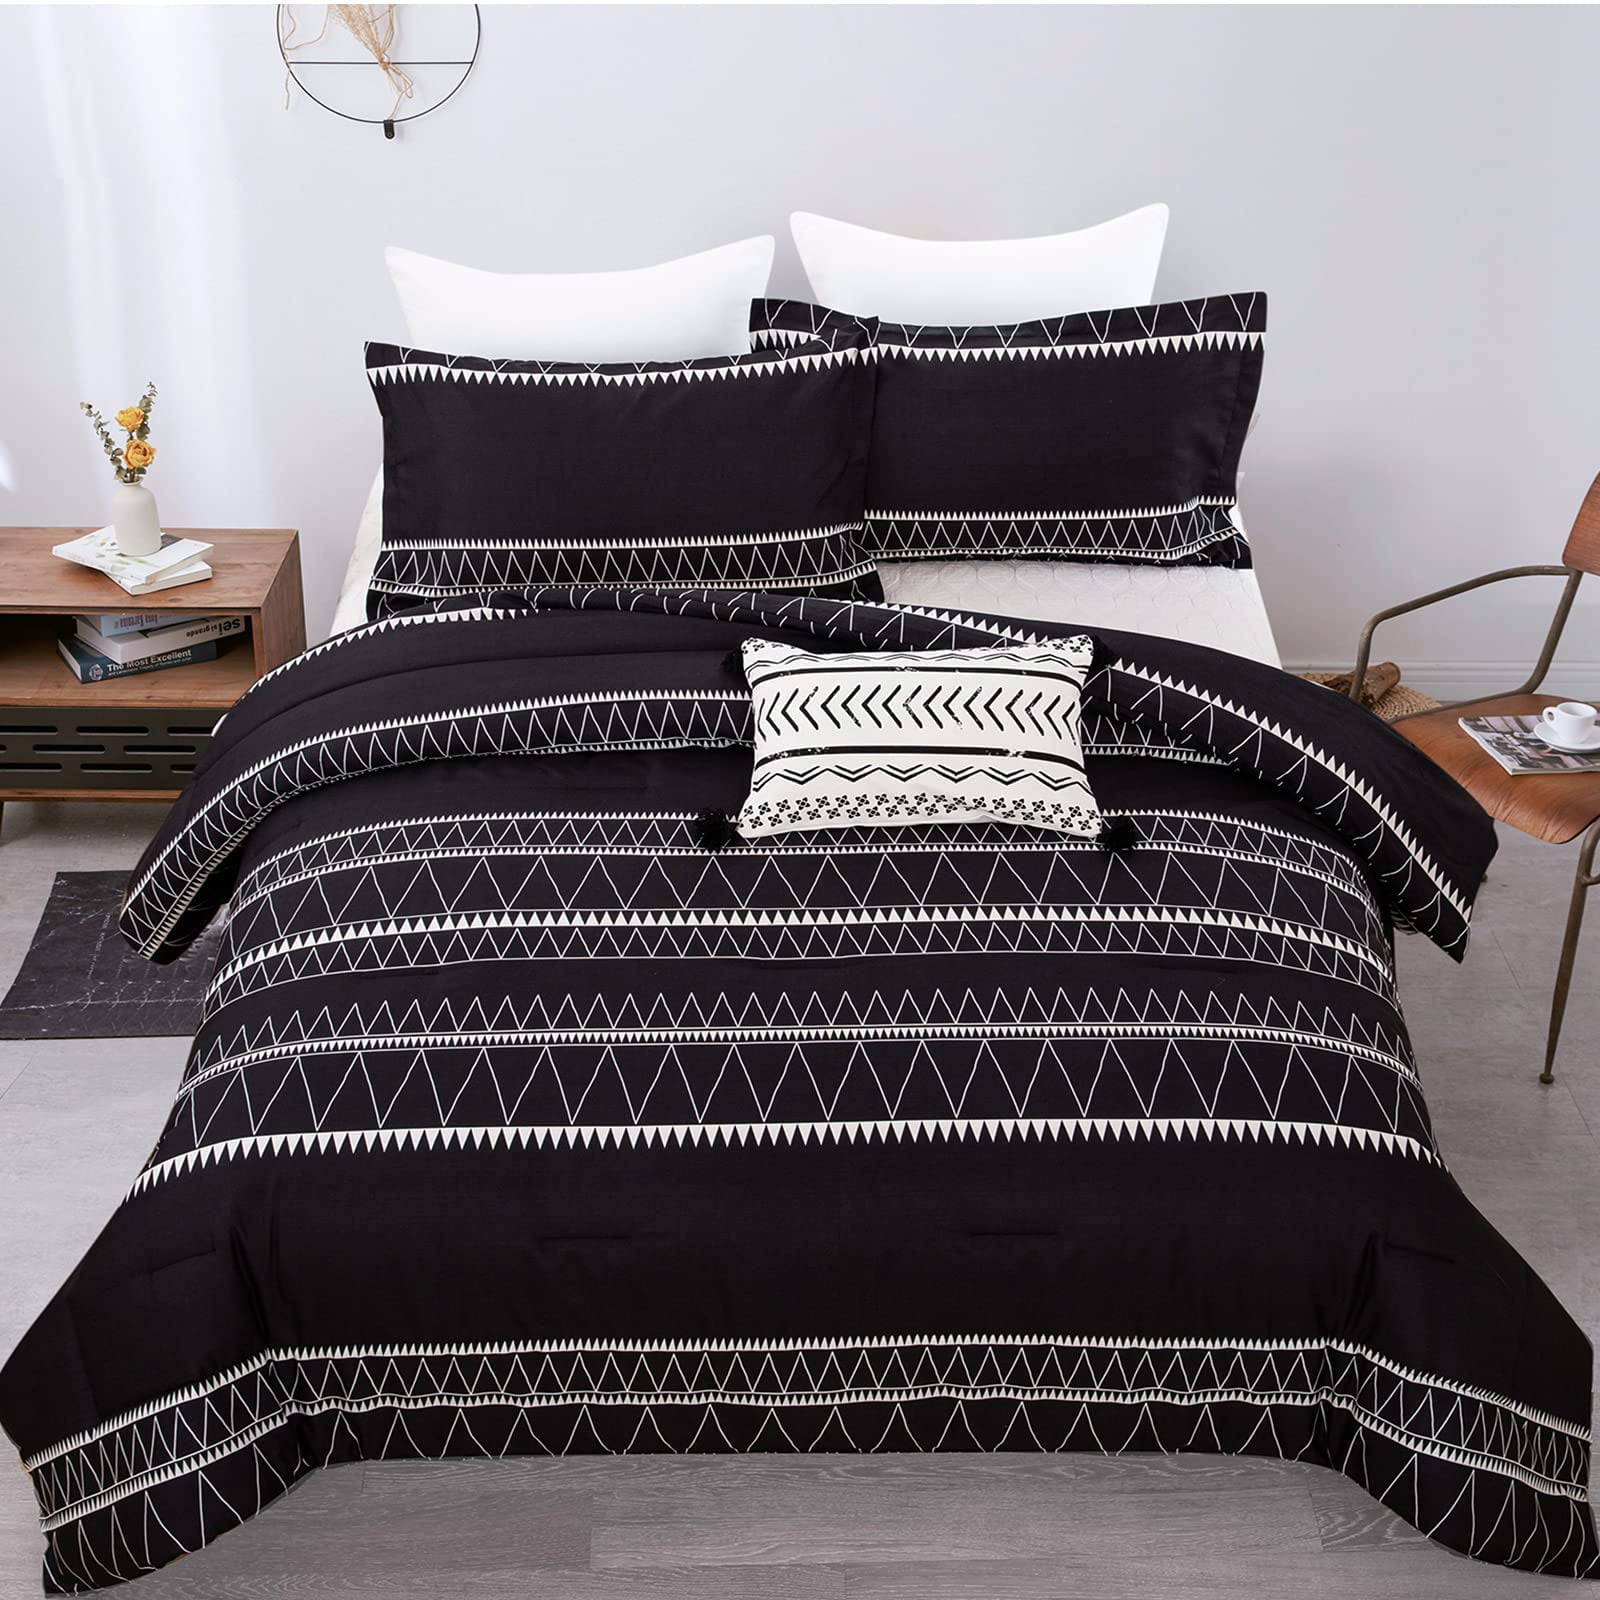 Sets of 2 Pillow Cases Down Alternative Comforter Reversible Bedding Sets 